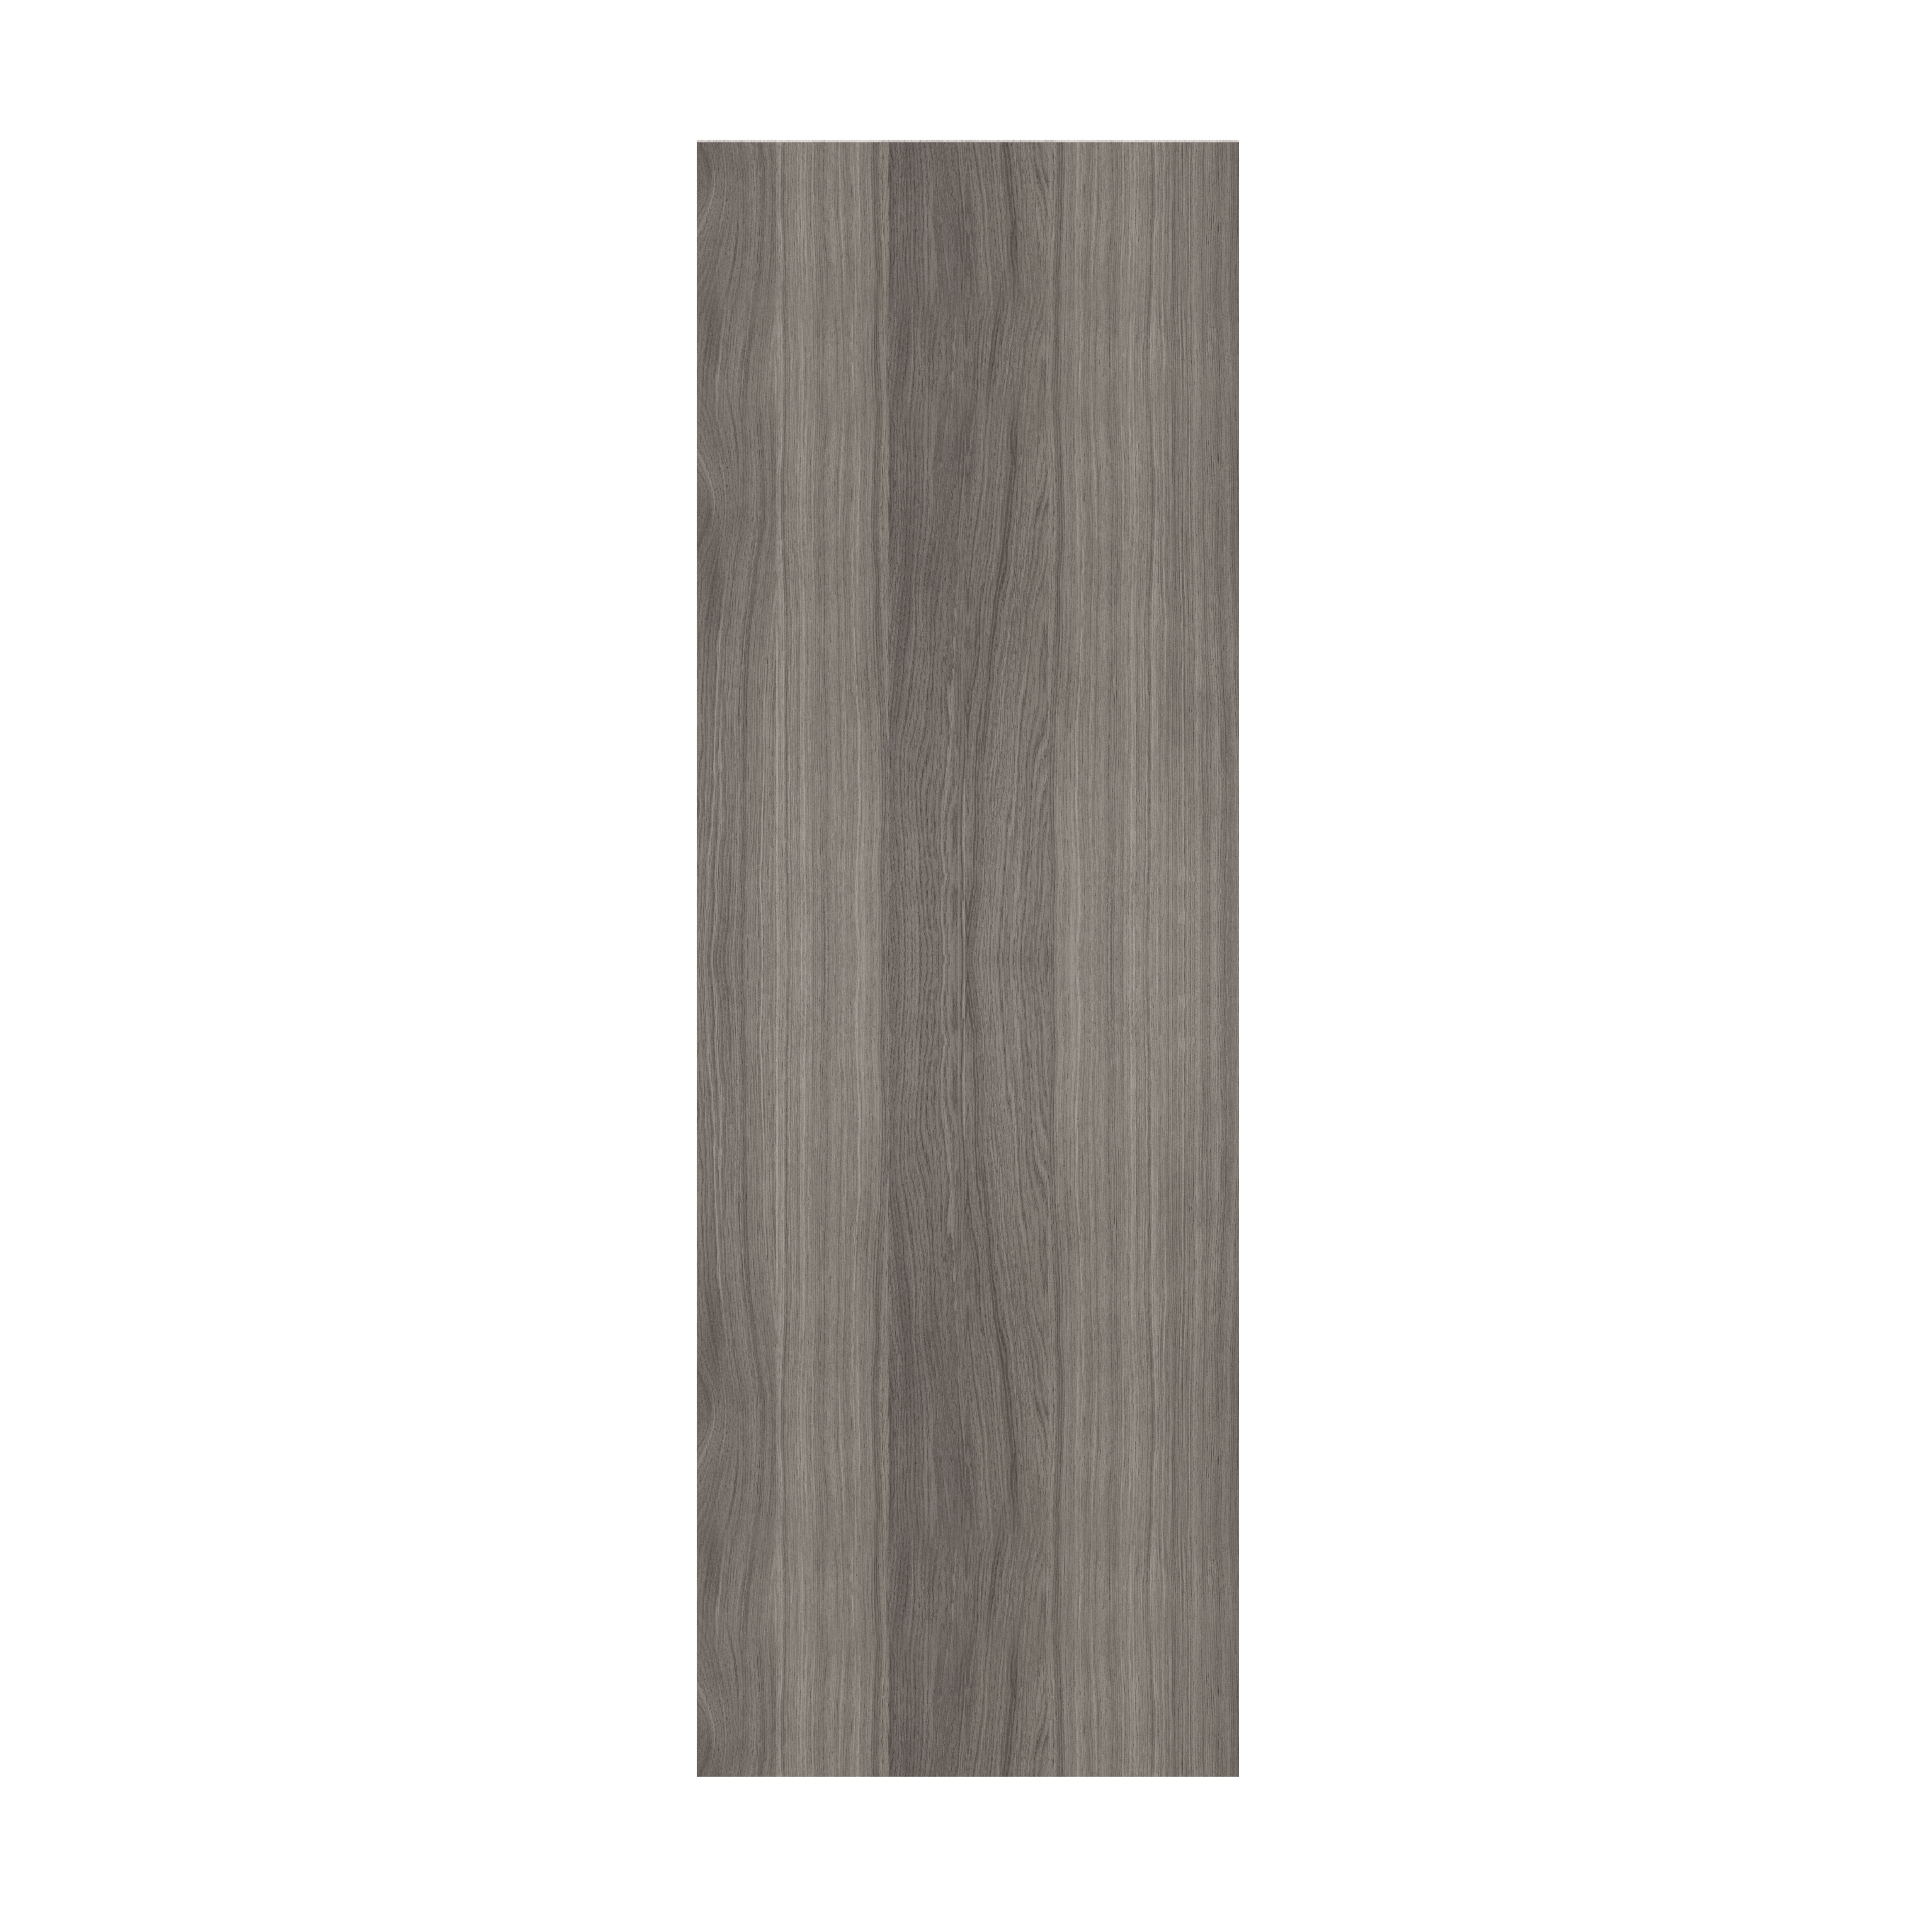 GoodHome Atomia Matt Grey oak effect Non-mirrored Modular furniture door, (H) 1497mm (W) 497mm